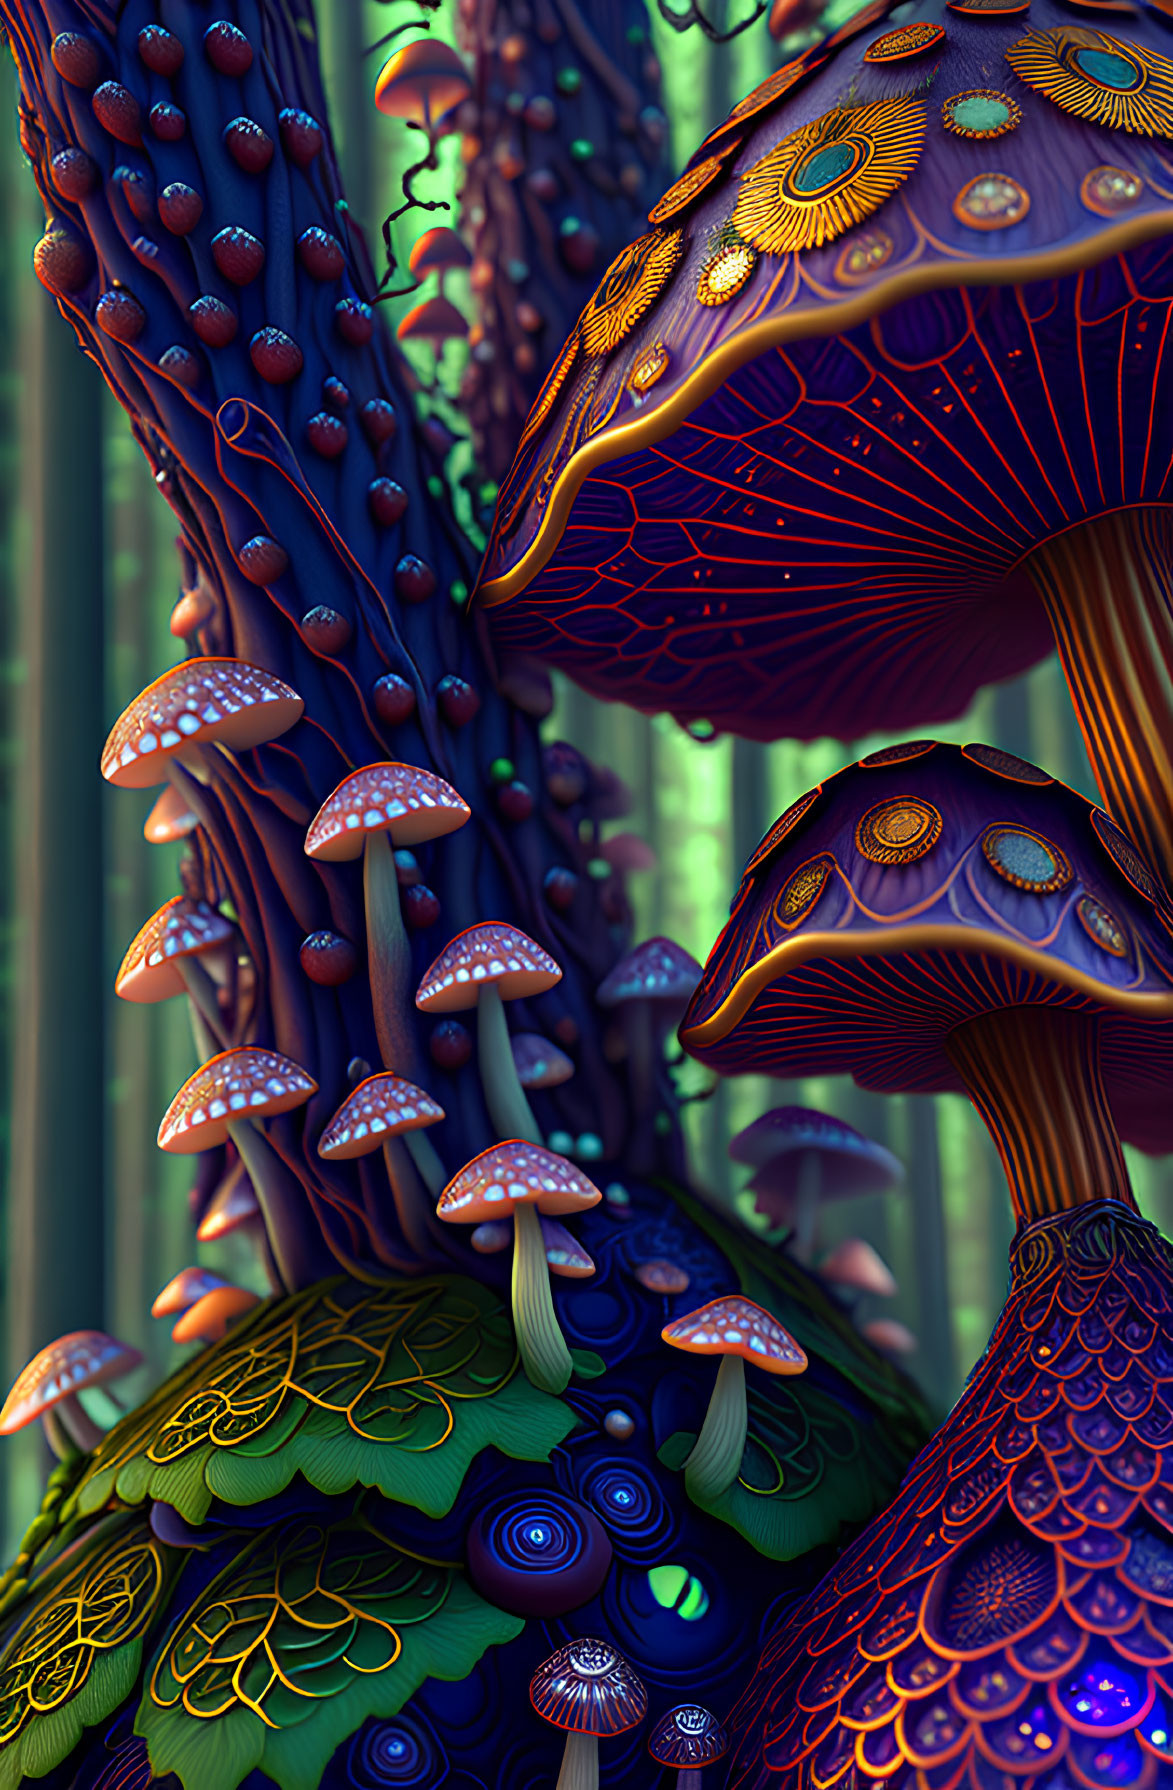 Fantasy digital art: Vibrant mushrooms in intricate patterns amid lush plant life